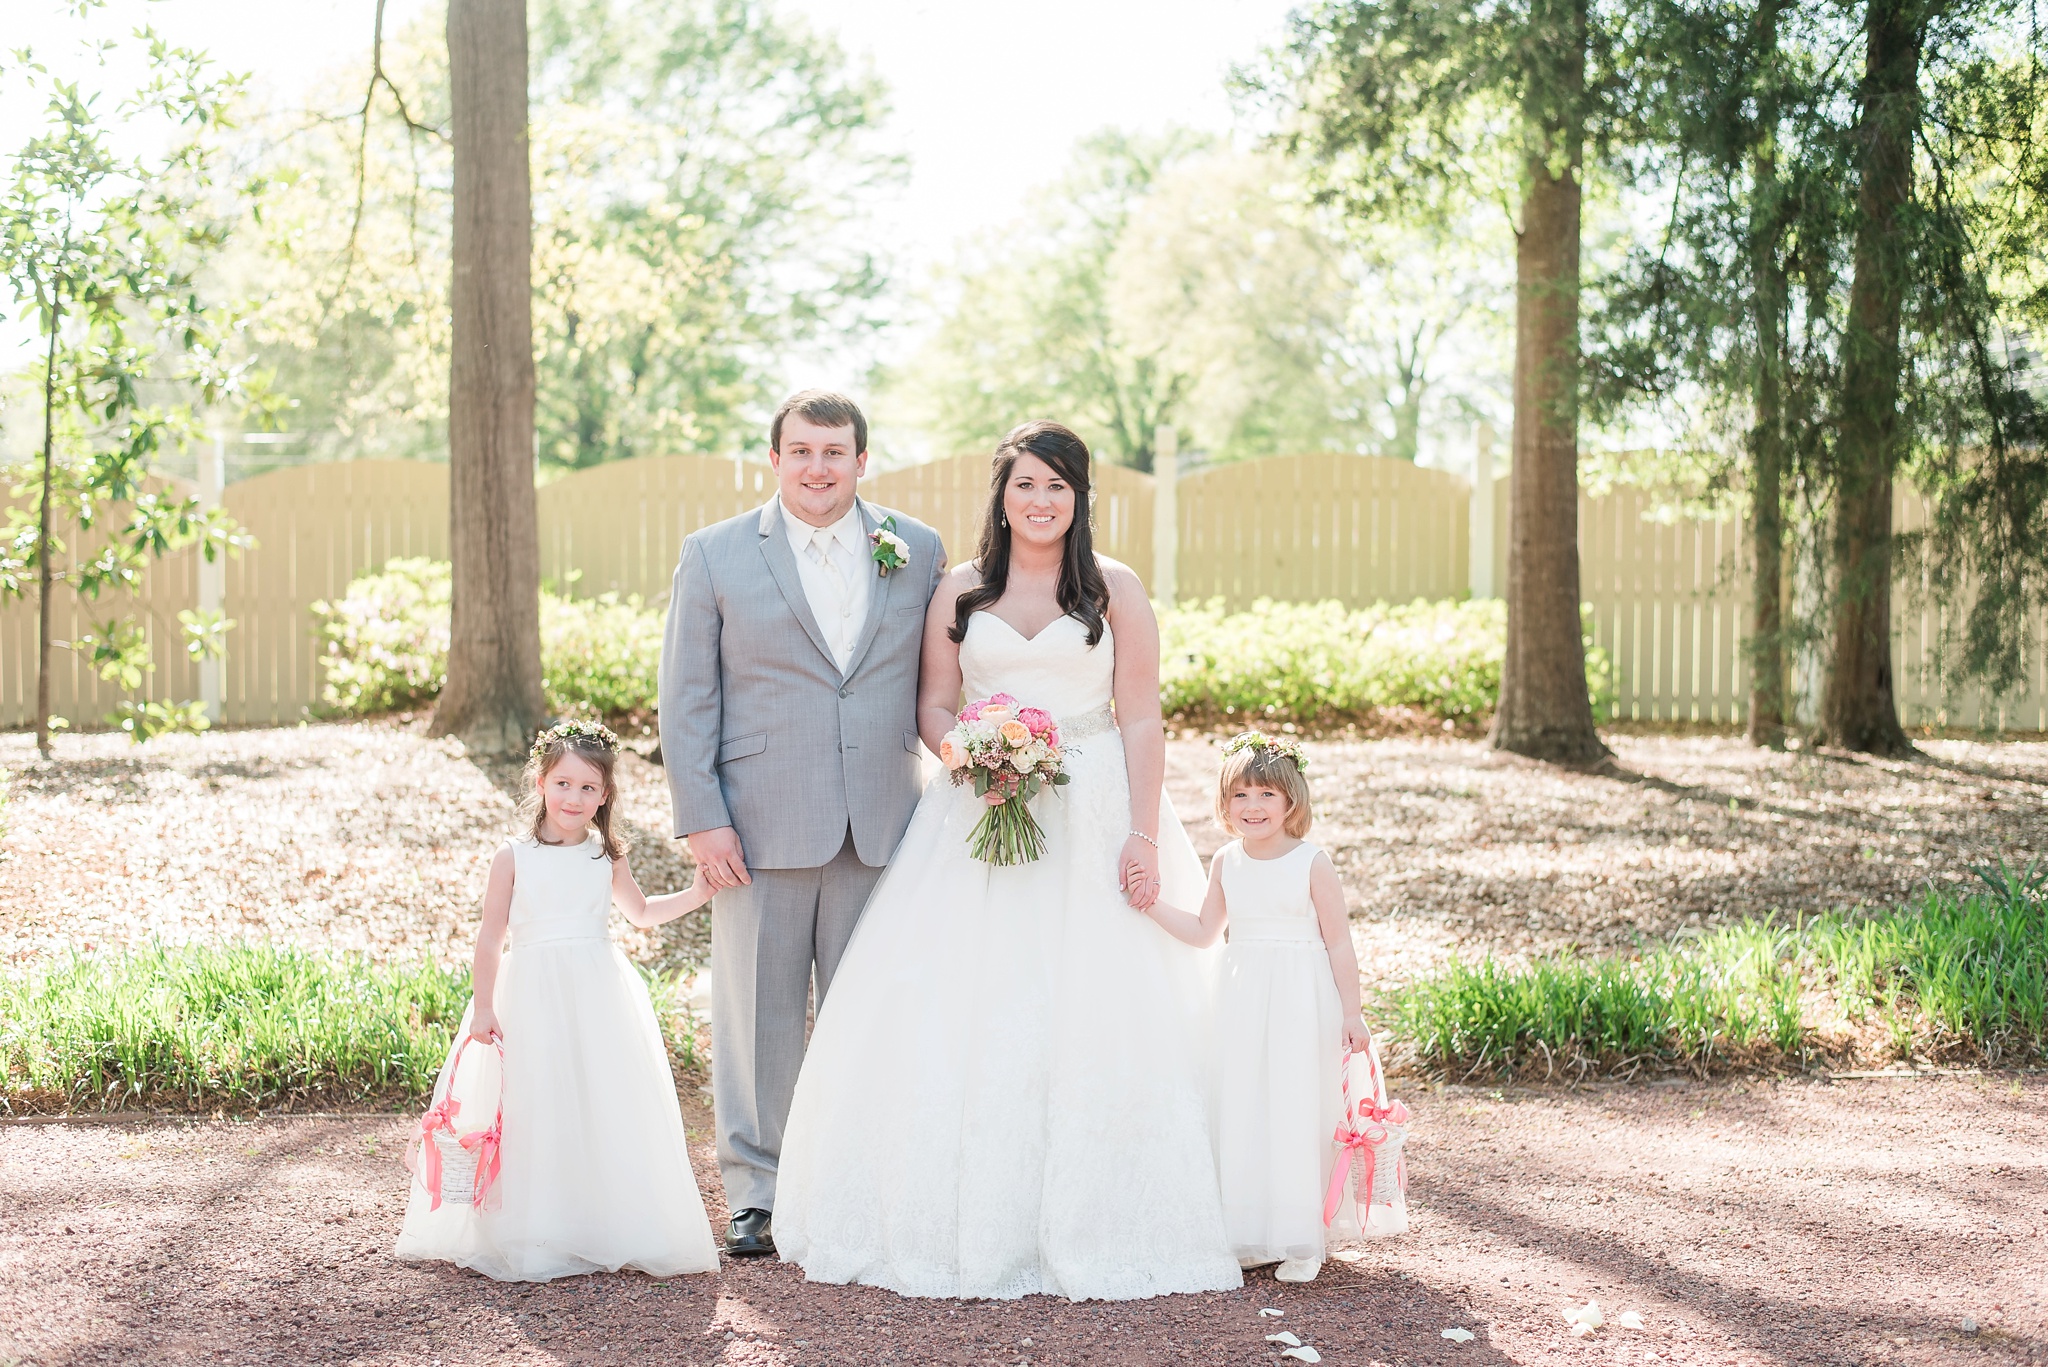 Aqua and Teal Spring Garden Wedding | Birmingham Alabama Wedding Photographers_0060.jpg